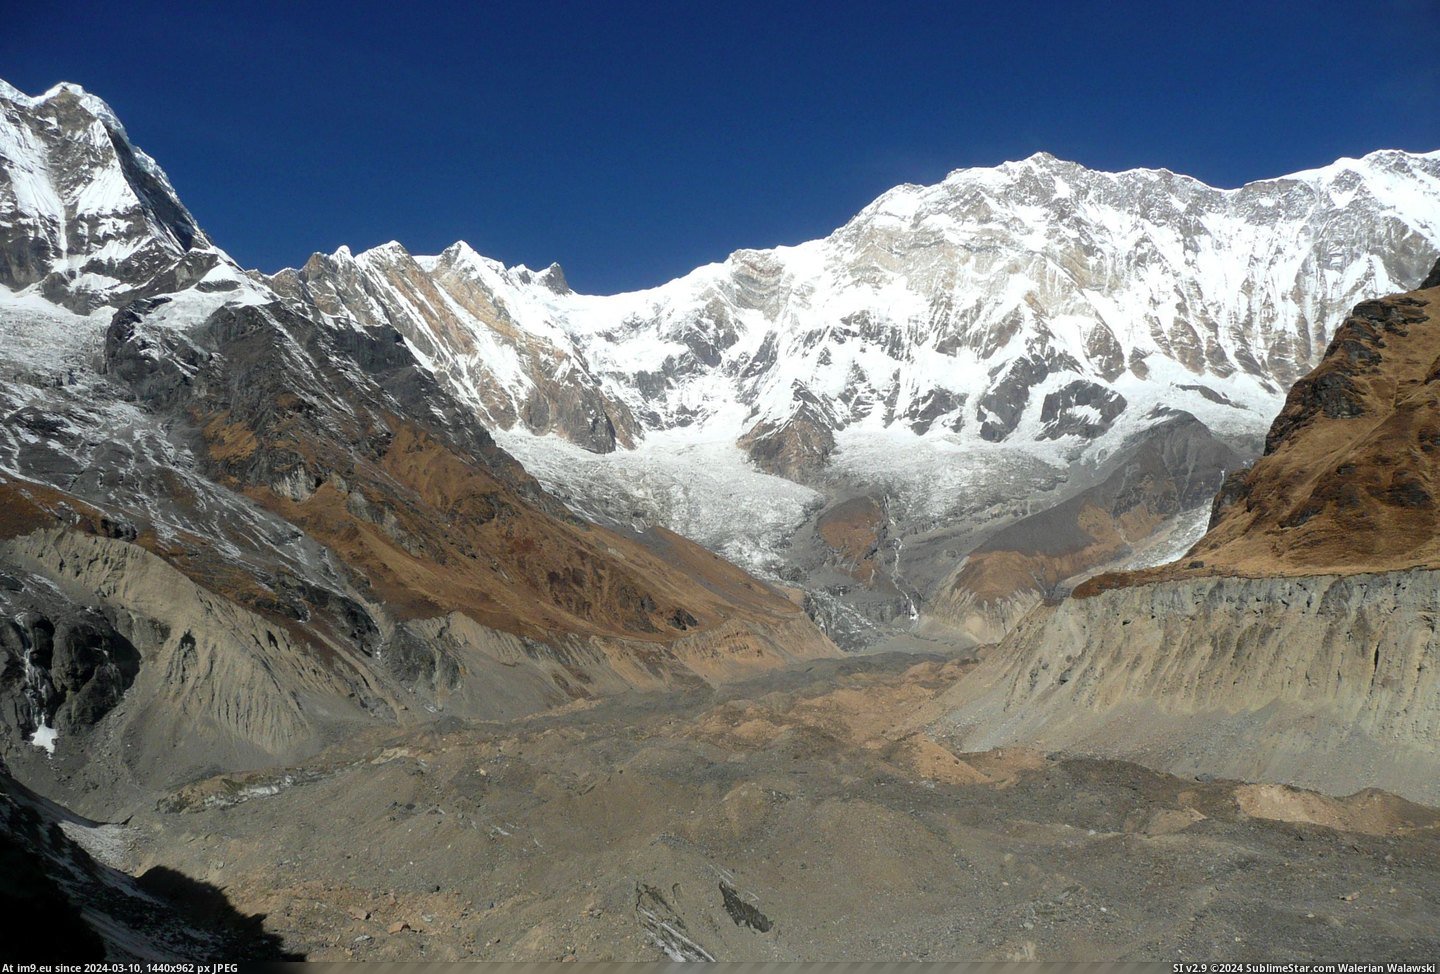 #Glacier #Covered #Nepal #Landslides #Wasn #Disappointed [Earthporn] The Landslides covered the Glacier, still wasn't Disappointed - Nepal (2764X1859) Pic. (Image of album My r/EARTHPORN favs))